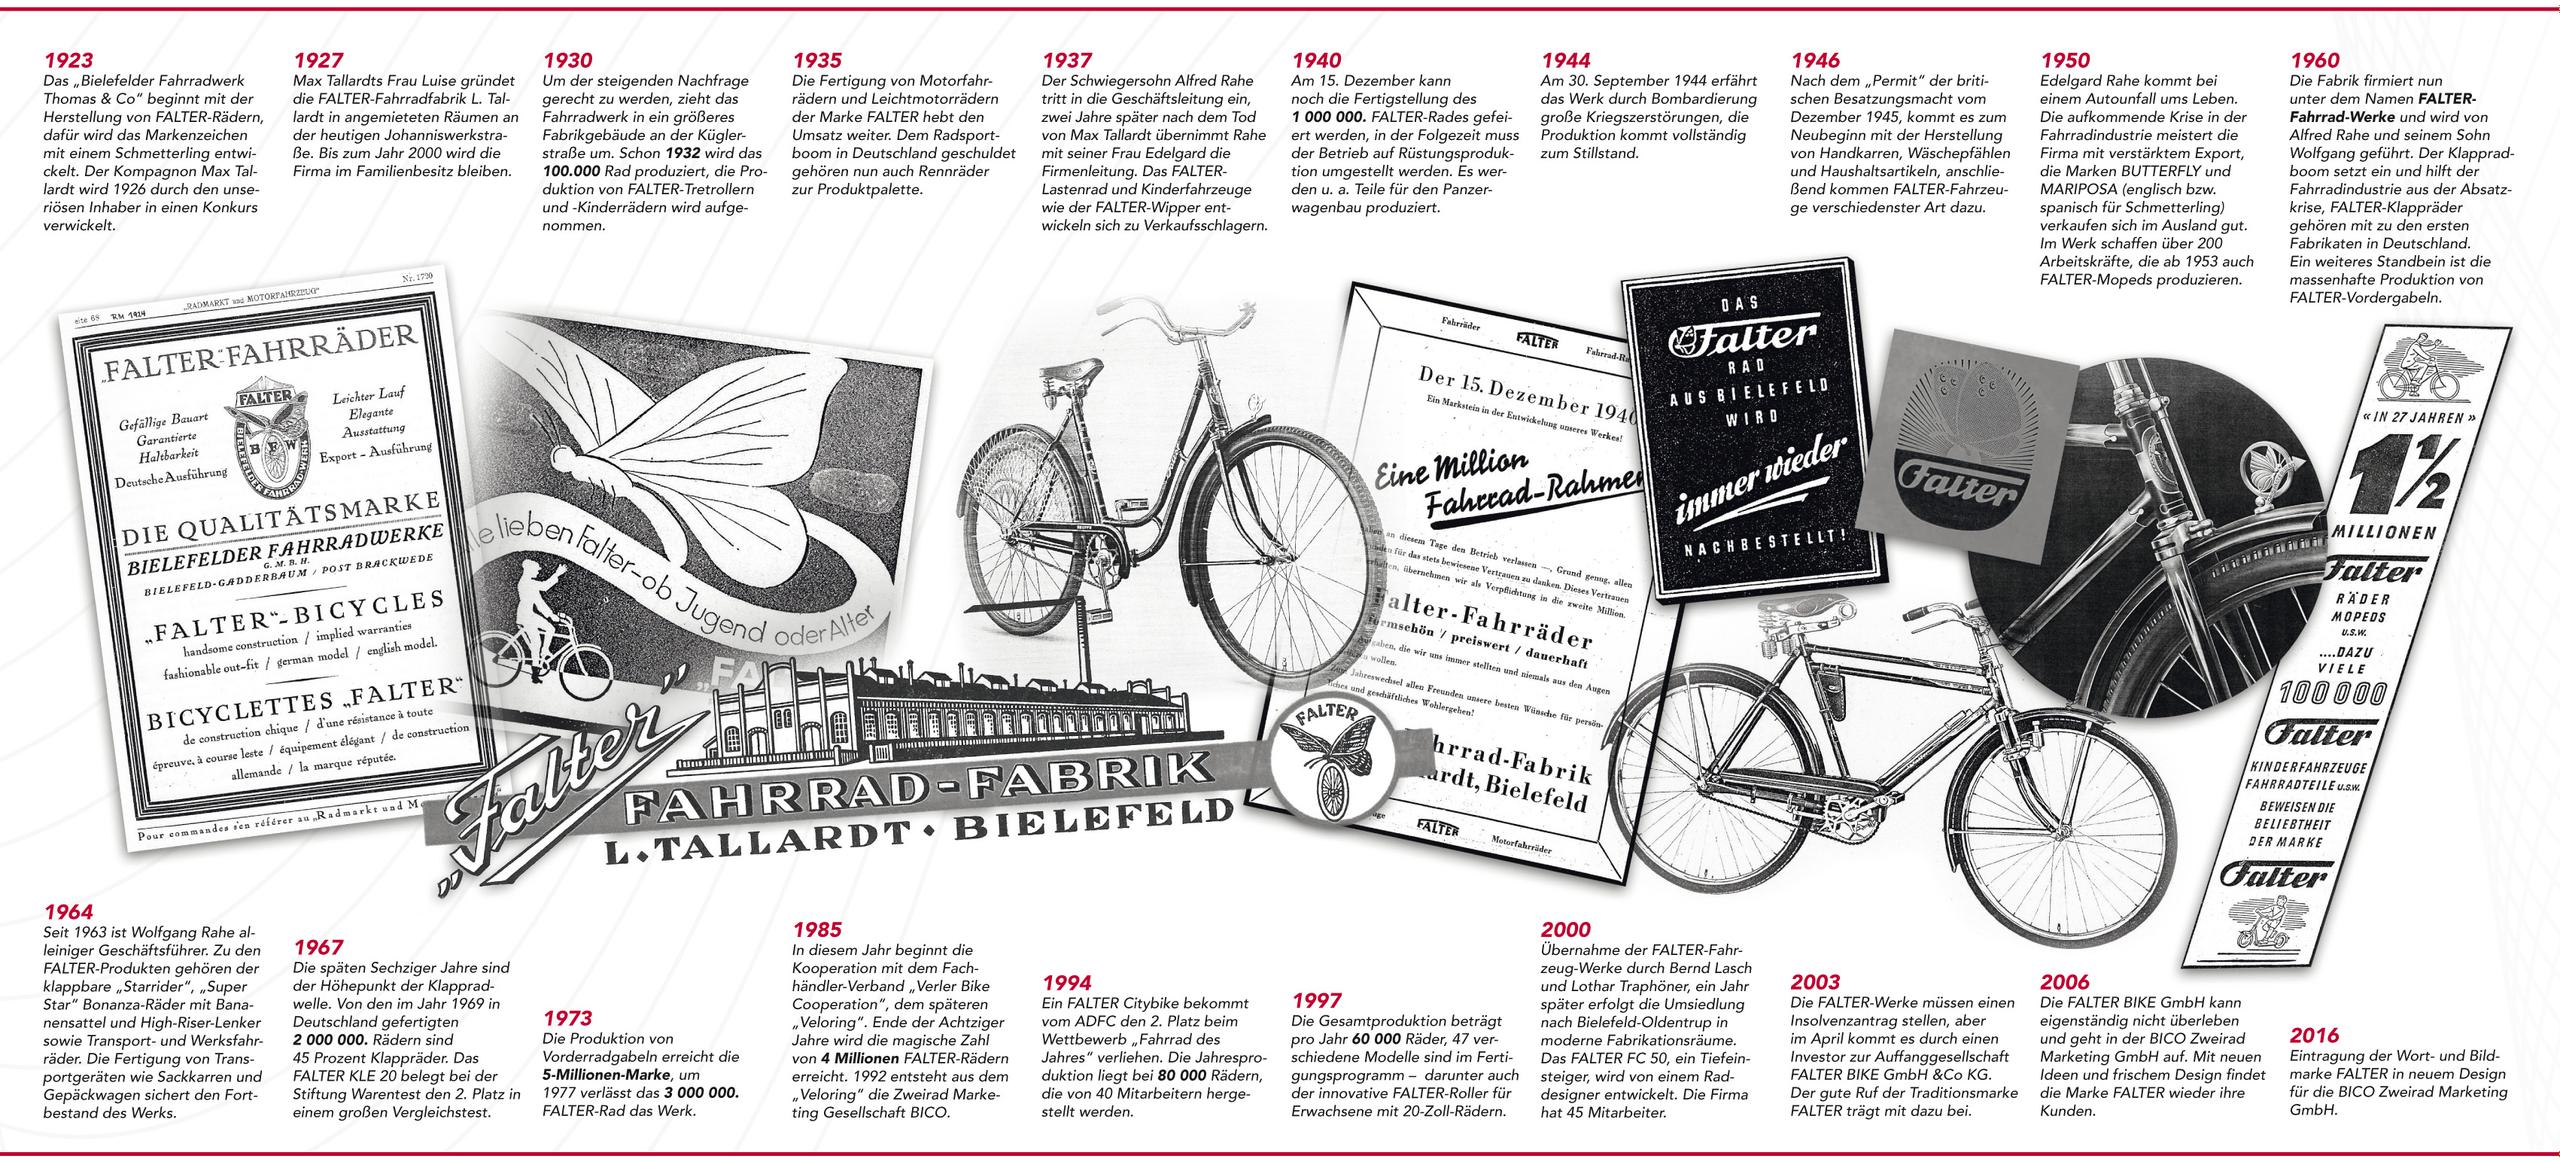 Falter-Chronik | Falter-Räder seit 1927